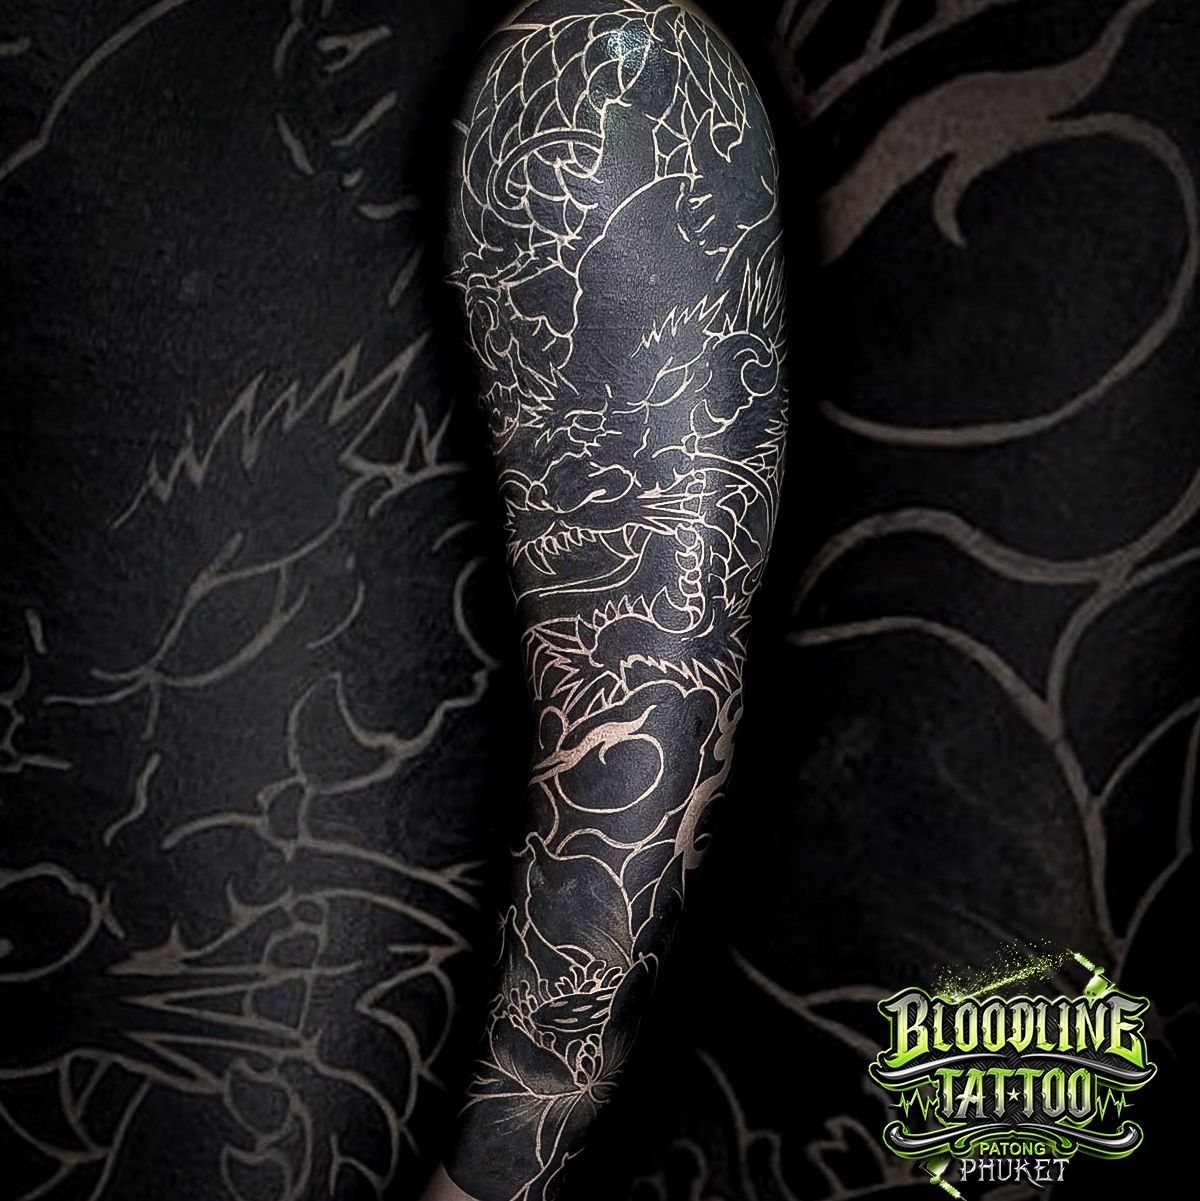 BLACKOUT SLEEVE  GÖRMEX  Blackwork Tattoo Artist London UK